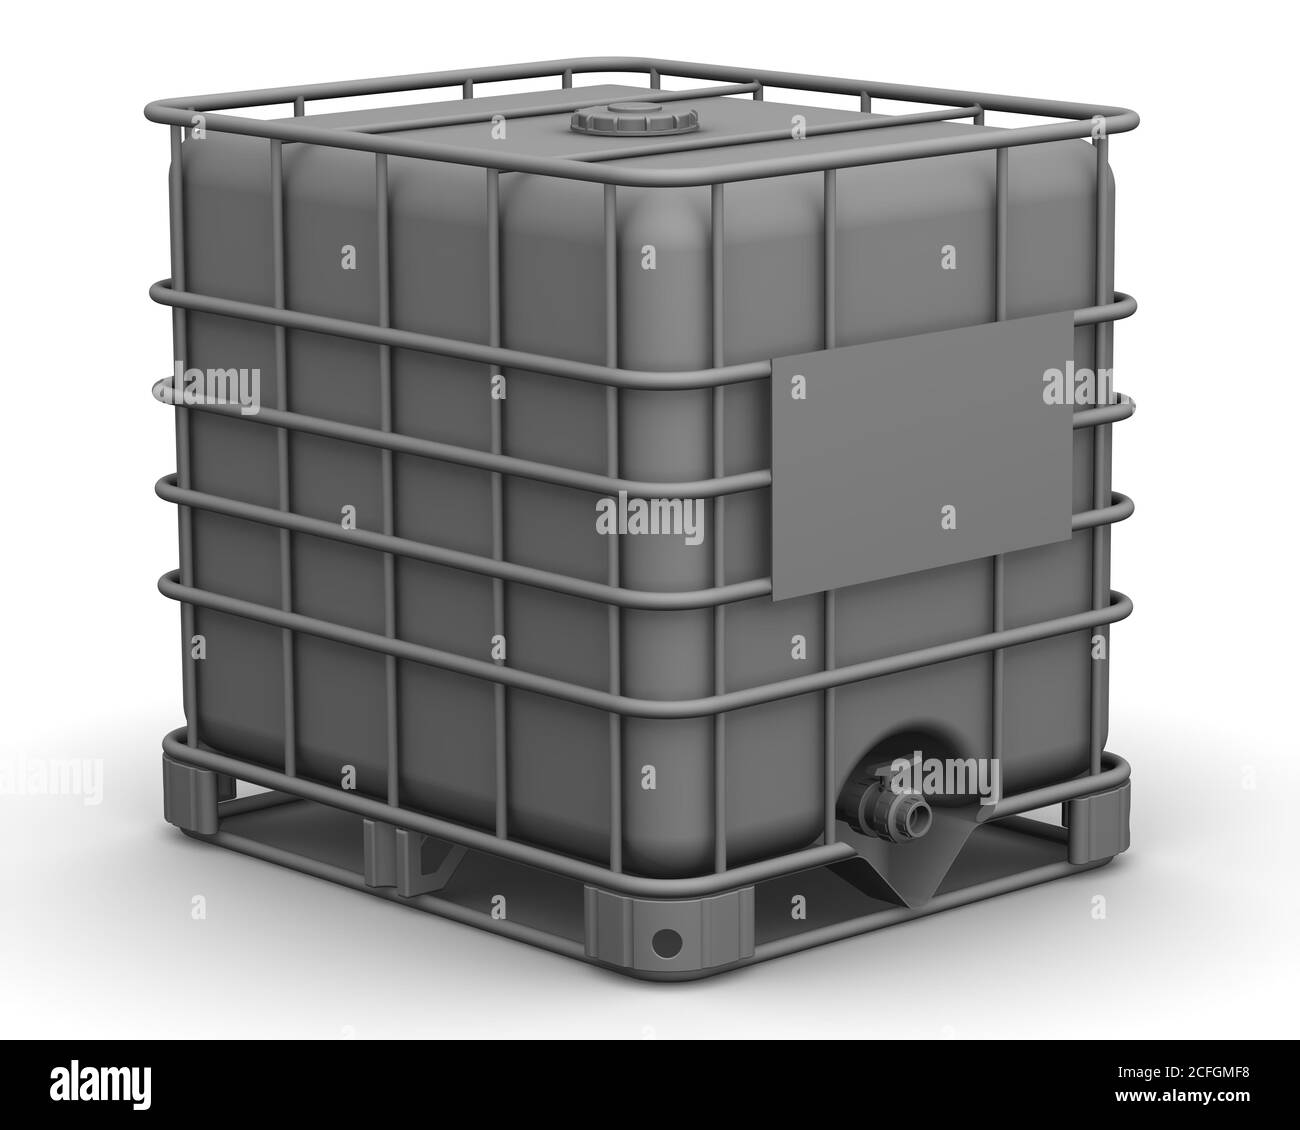 Intermediate bulk container - Wikipedia